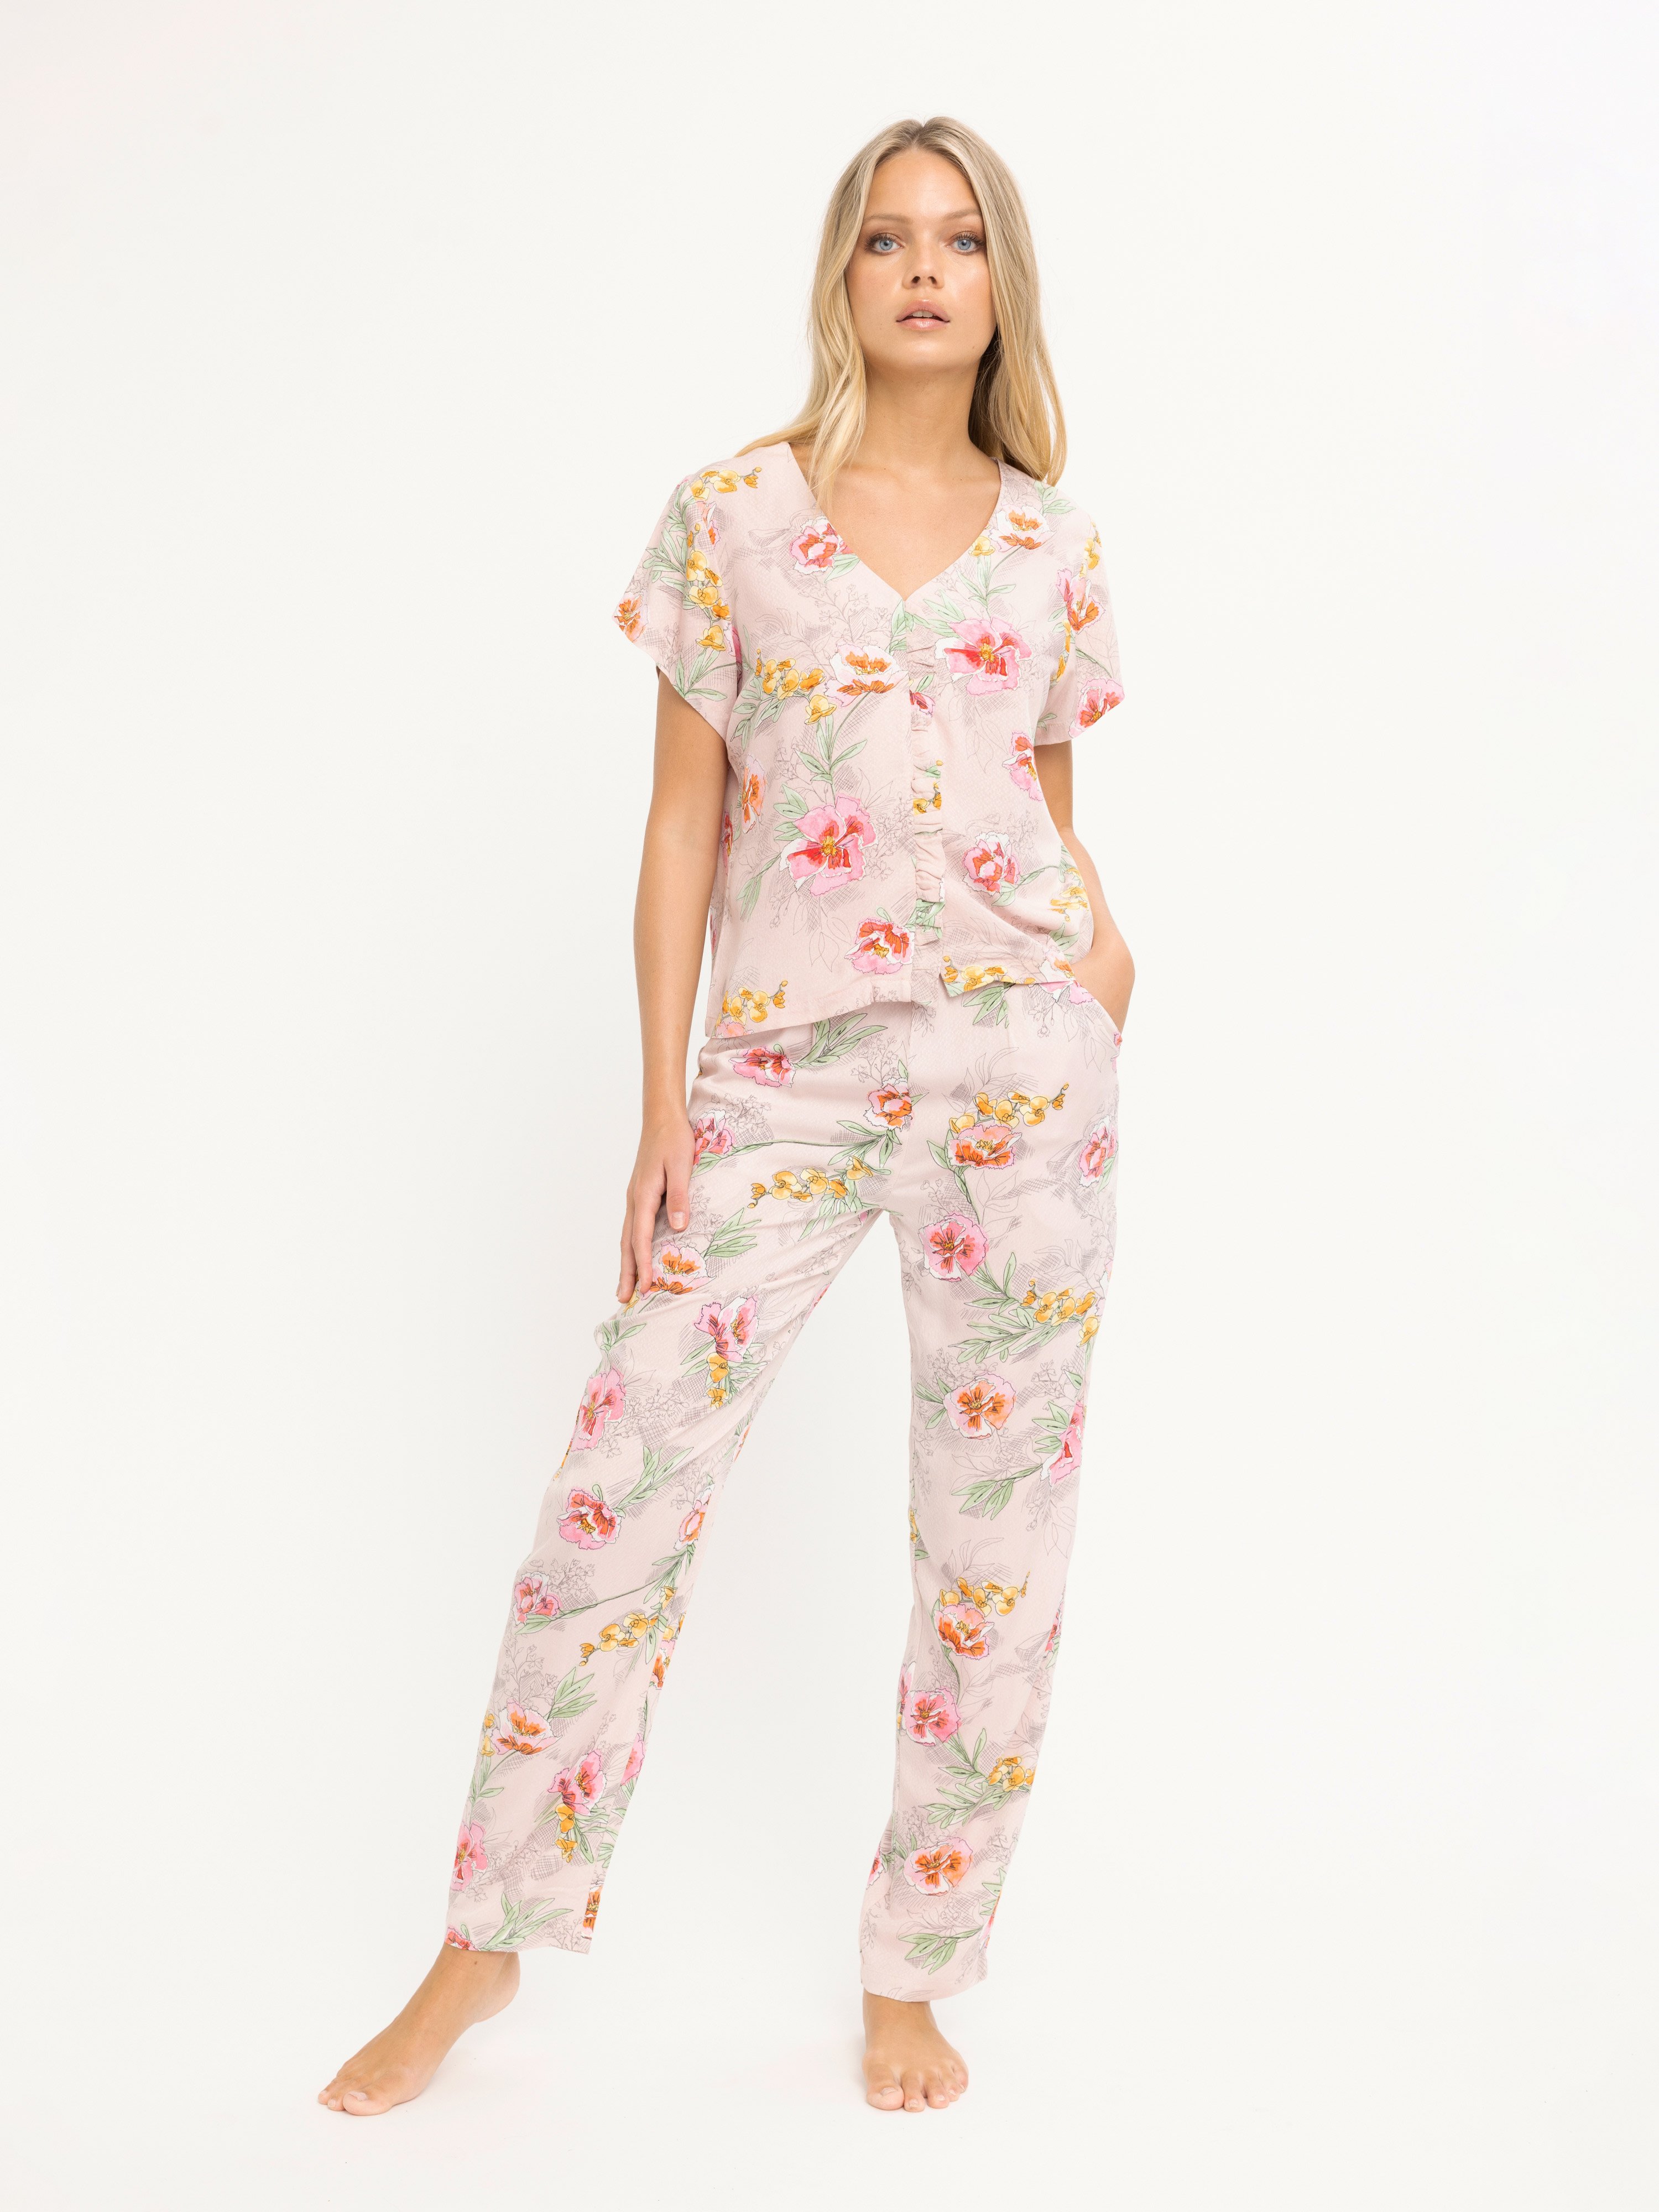 Viola Long Pajama Pants - Sweet Blossoms - $9.98 - CHANGE Lingerie